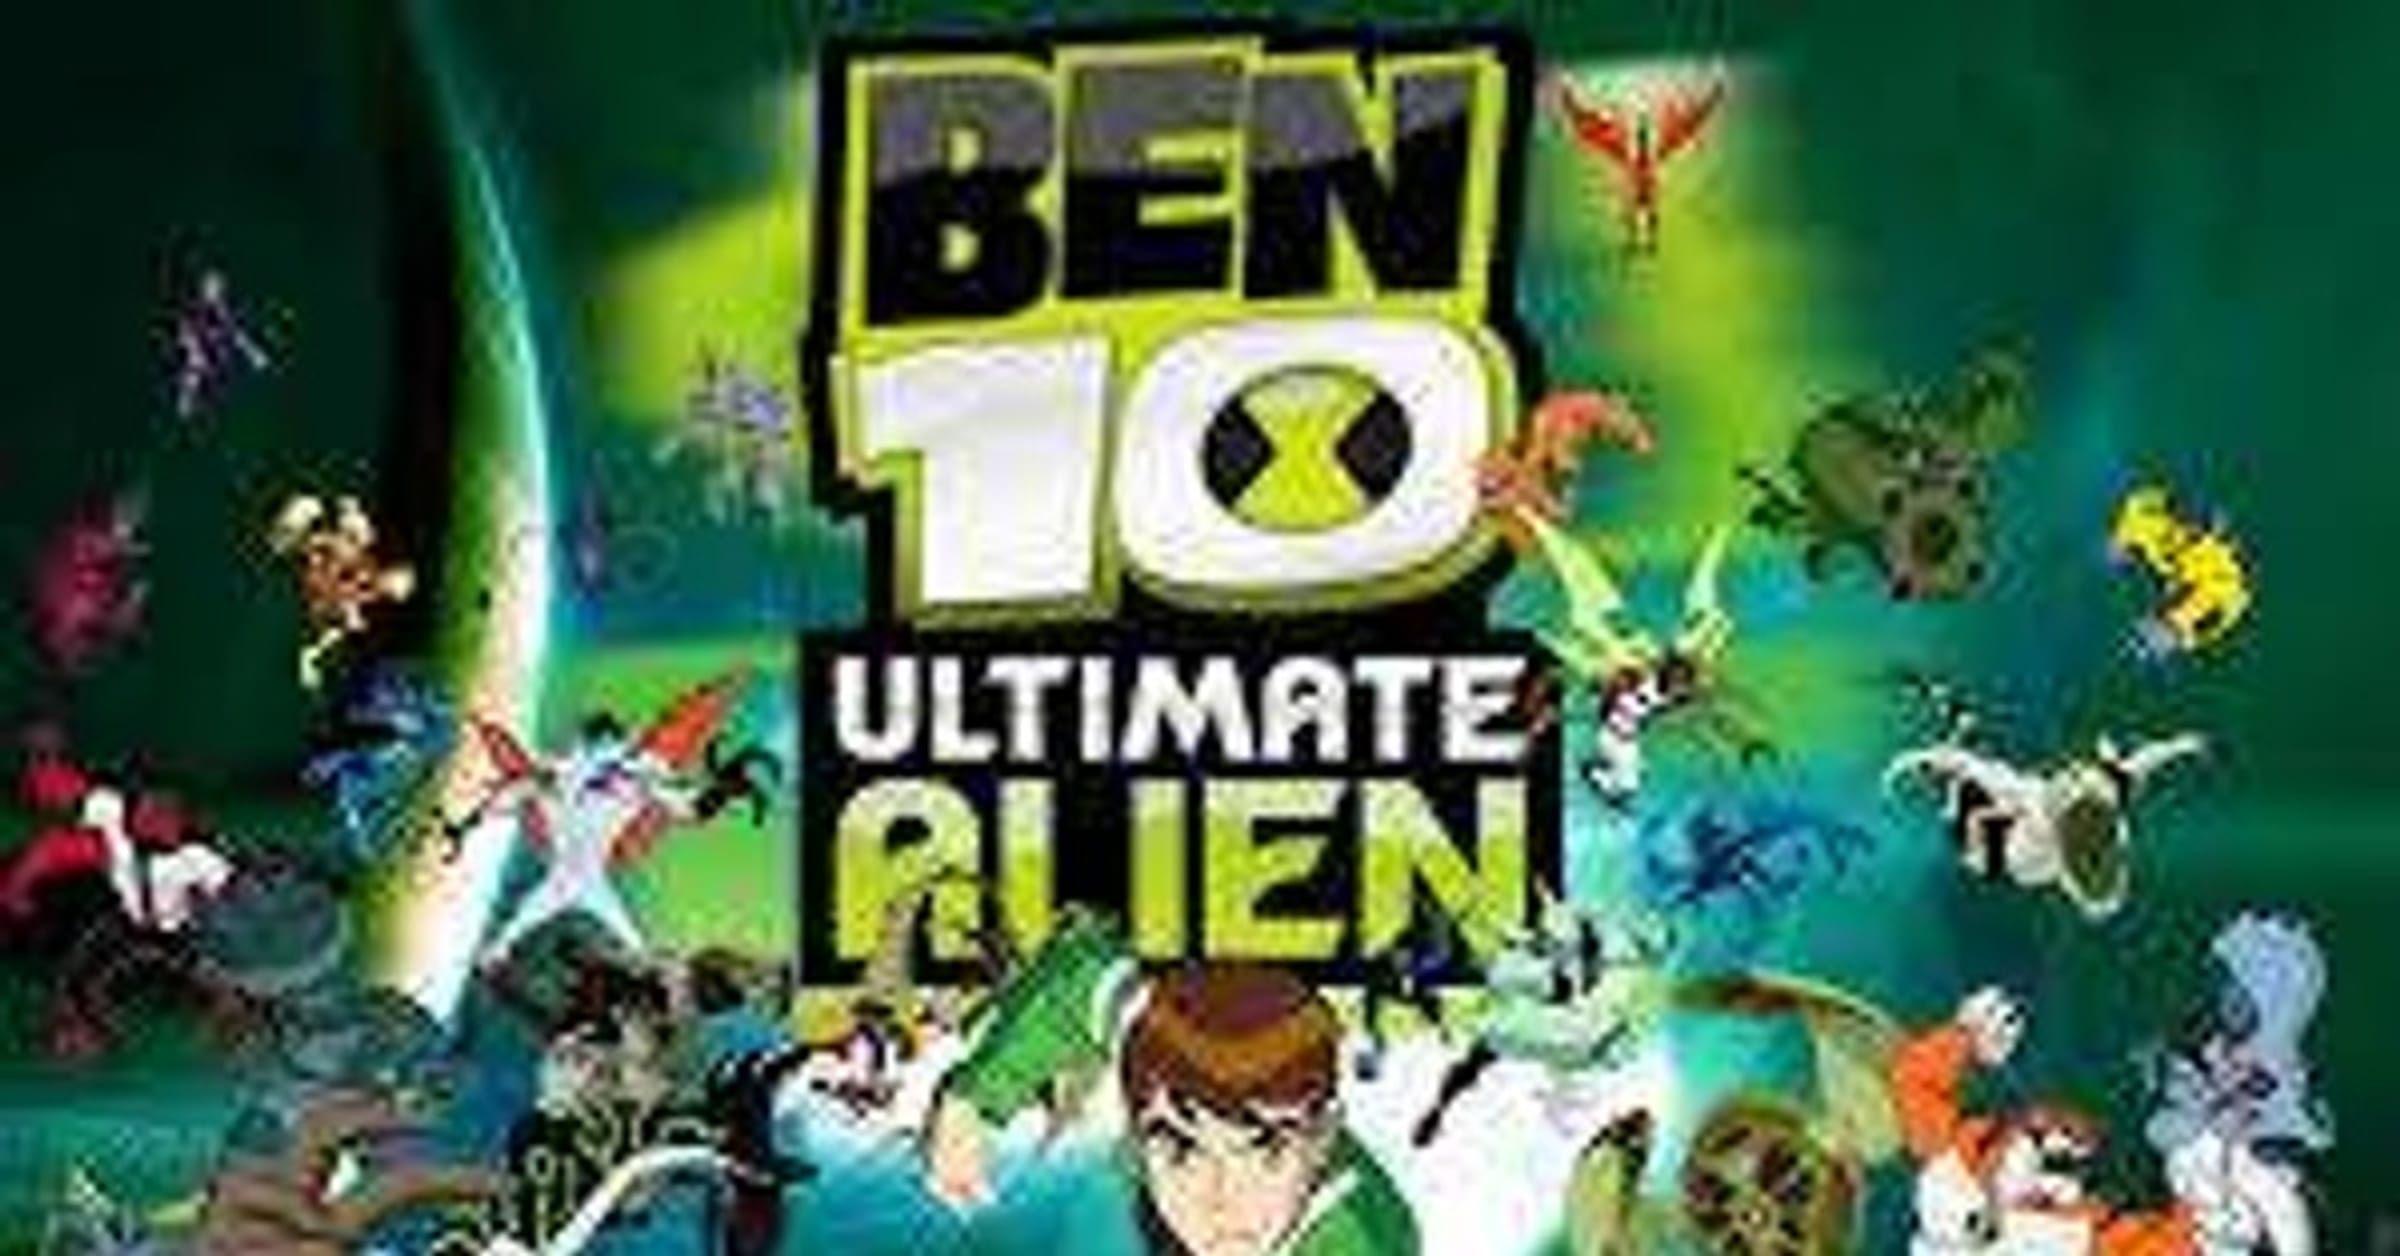 Ben 10: Ultimate Alien (a Titles & Air Dates Guide)